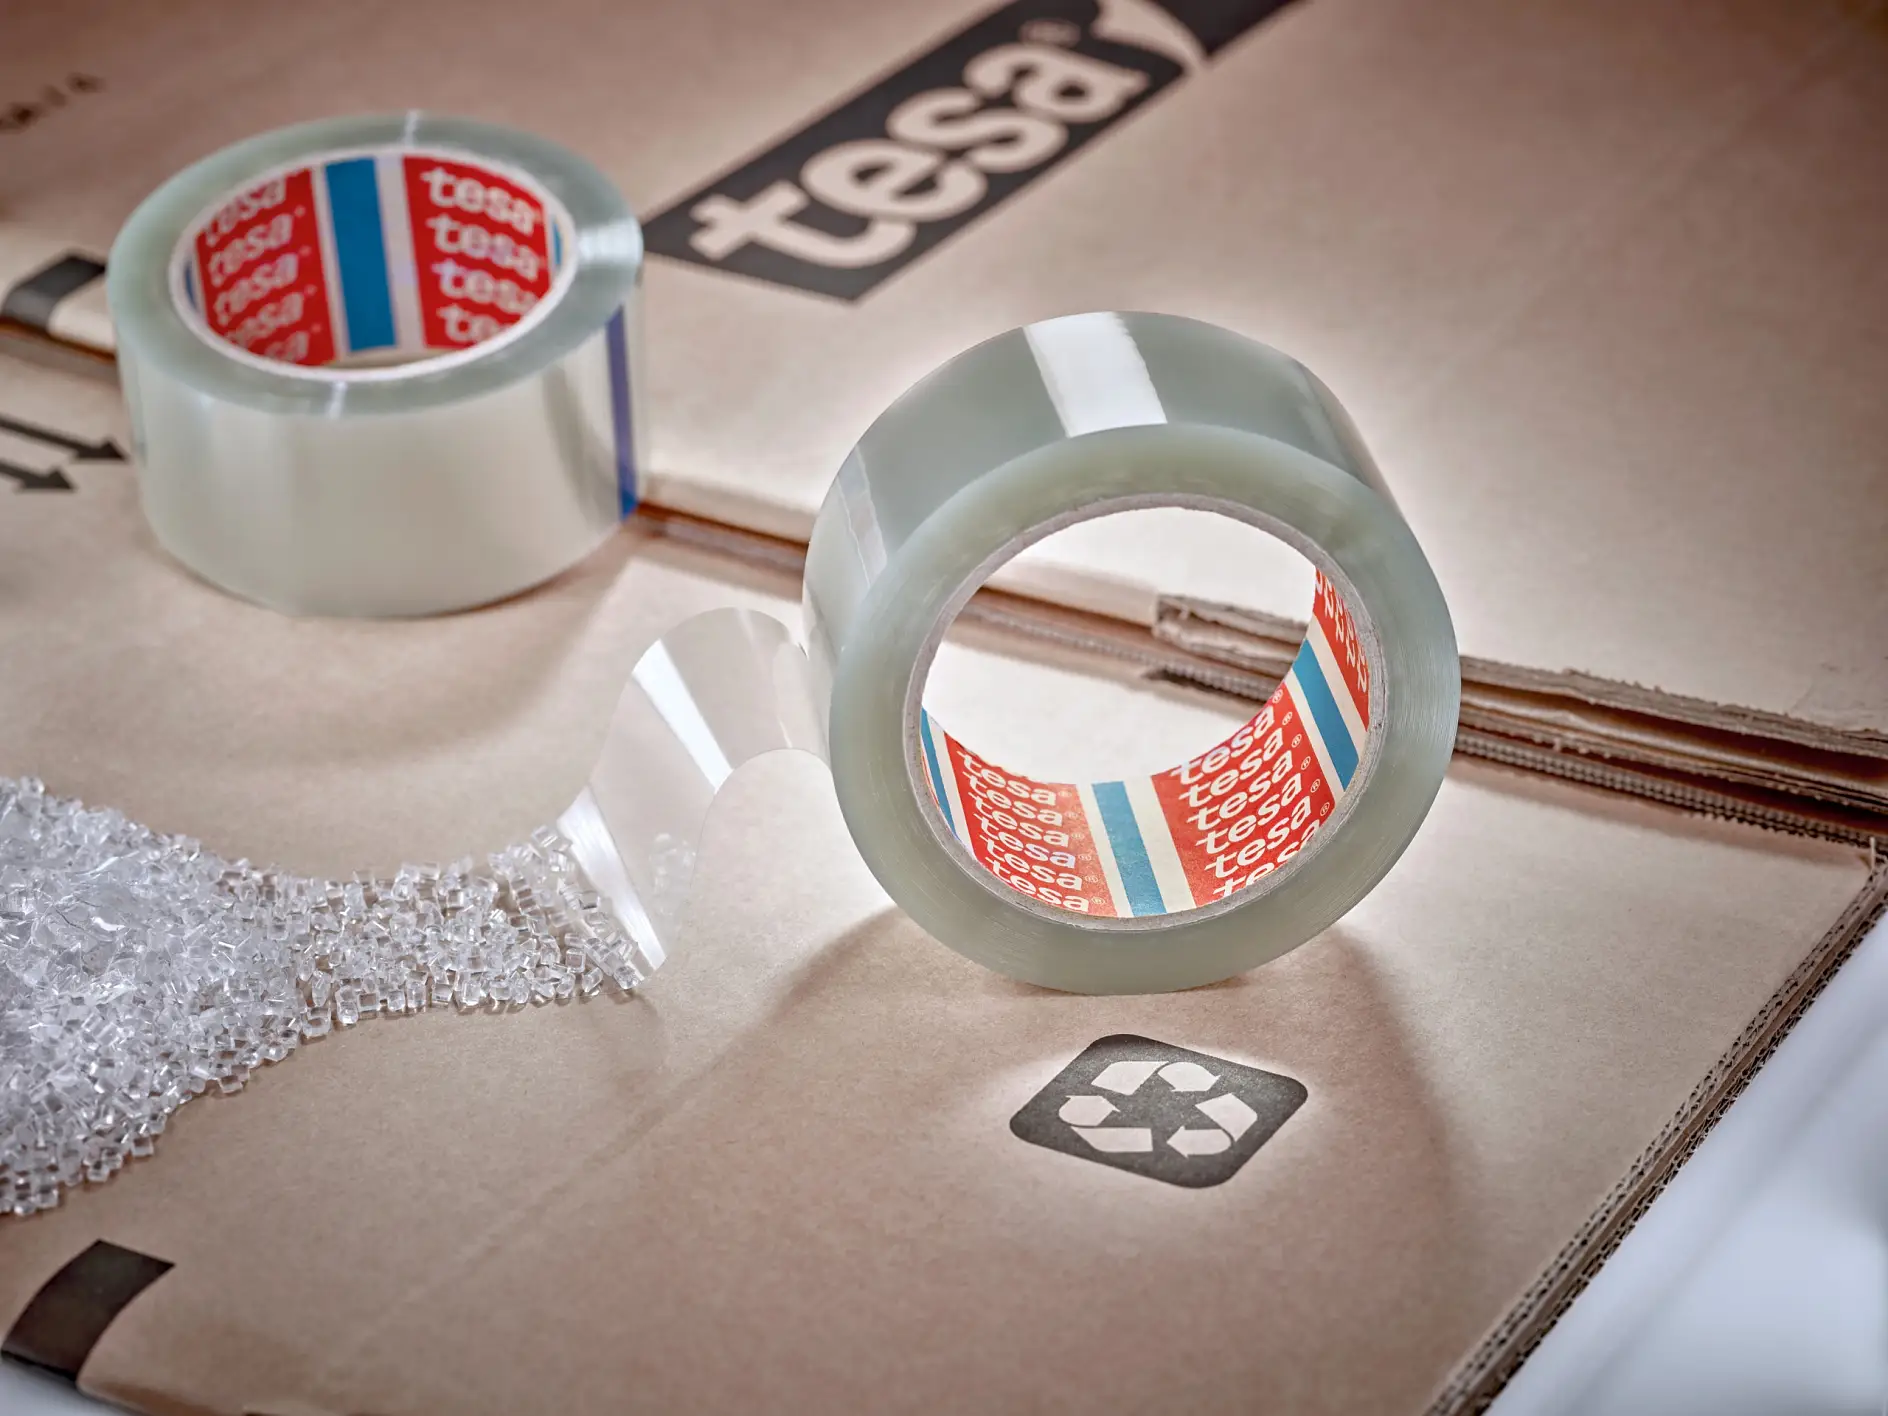 tesa-60412-recycled-pet-packaging-tape-mood-5-72dpi